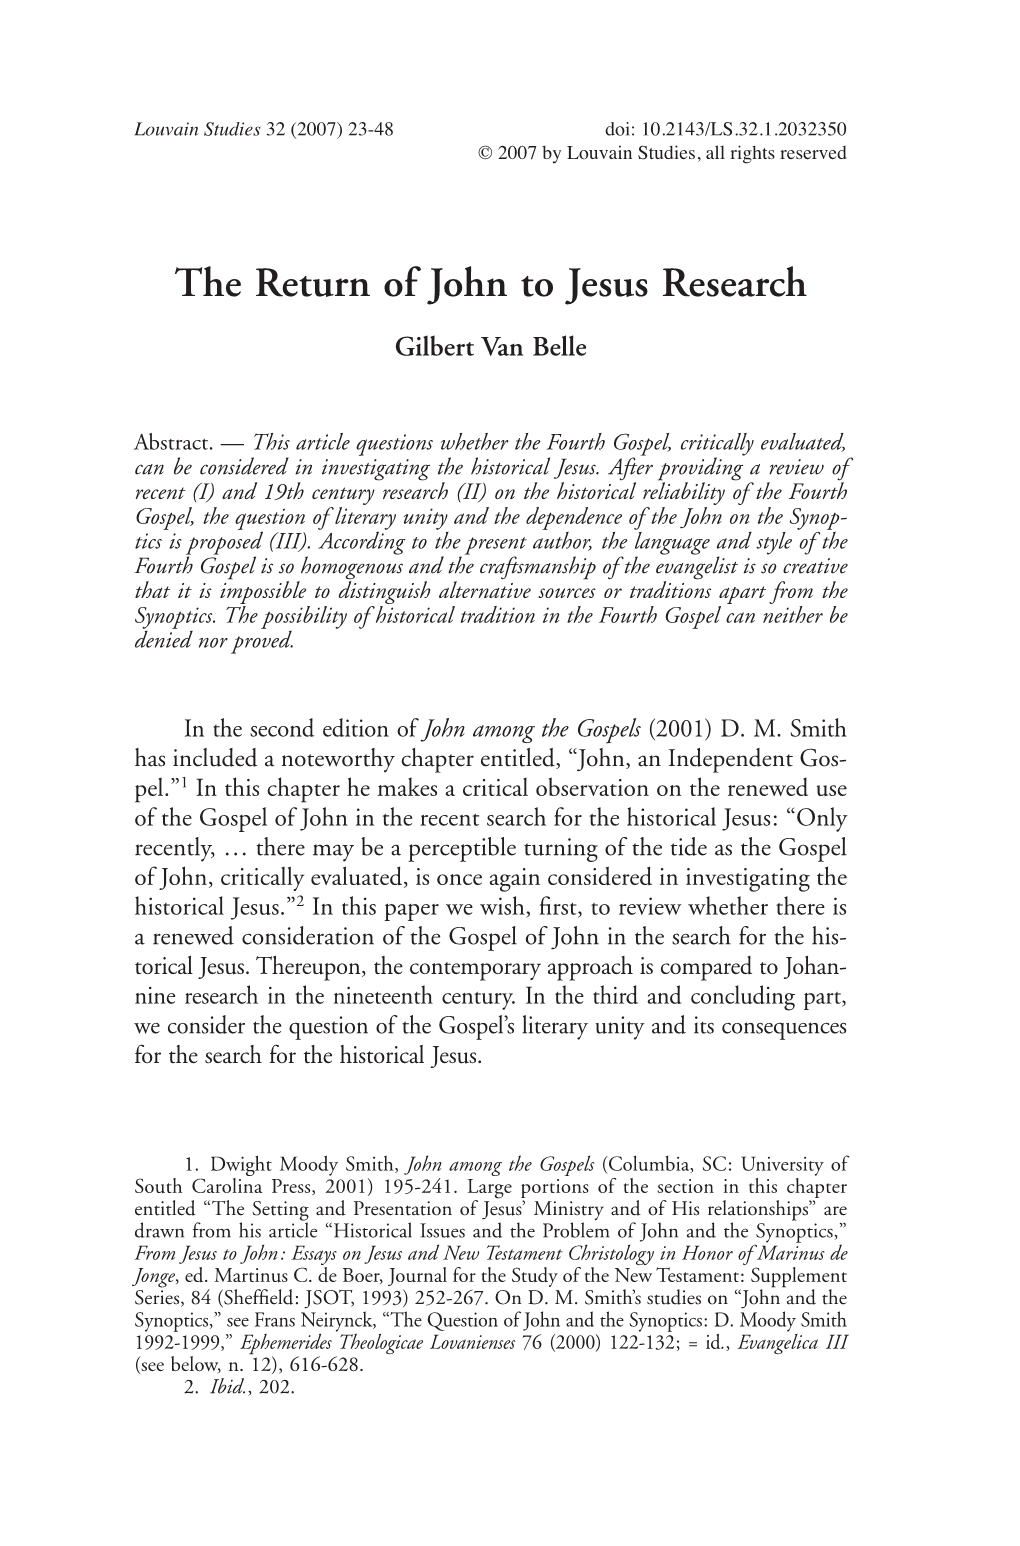 The Return of John to Jesus Research Gilbert Van Belle